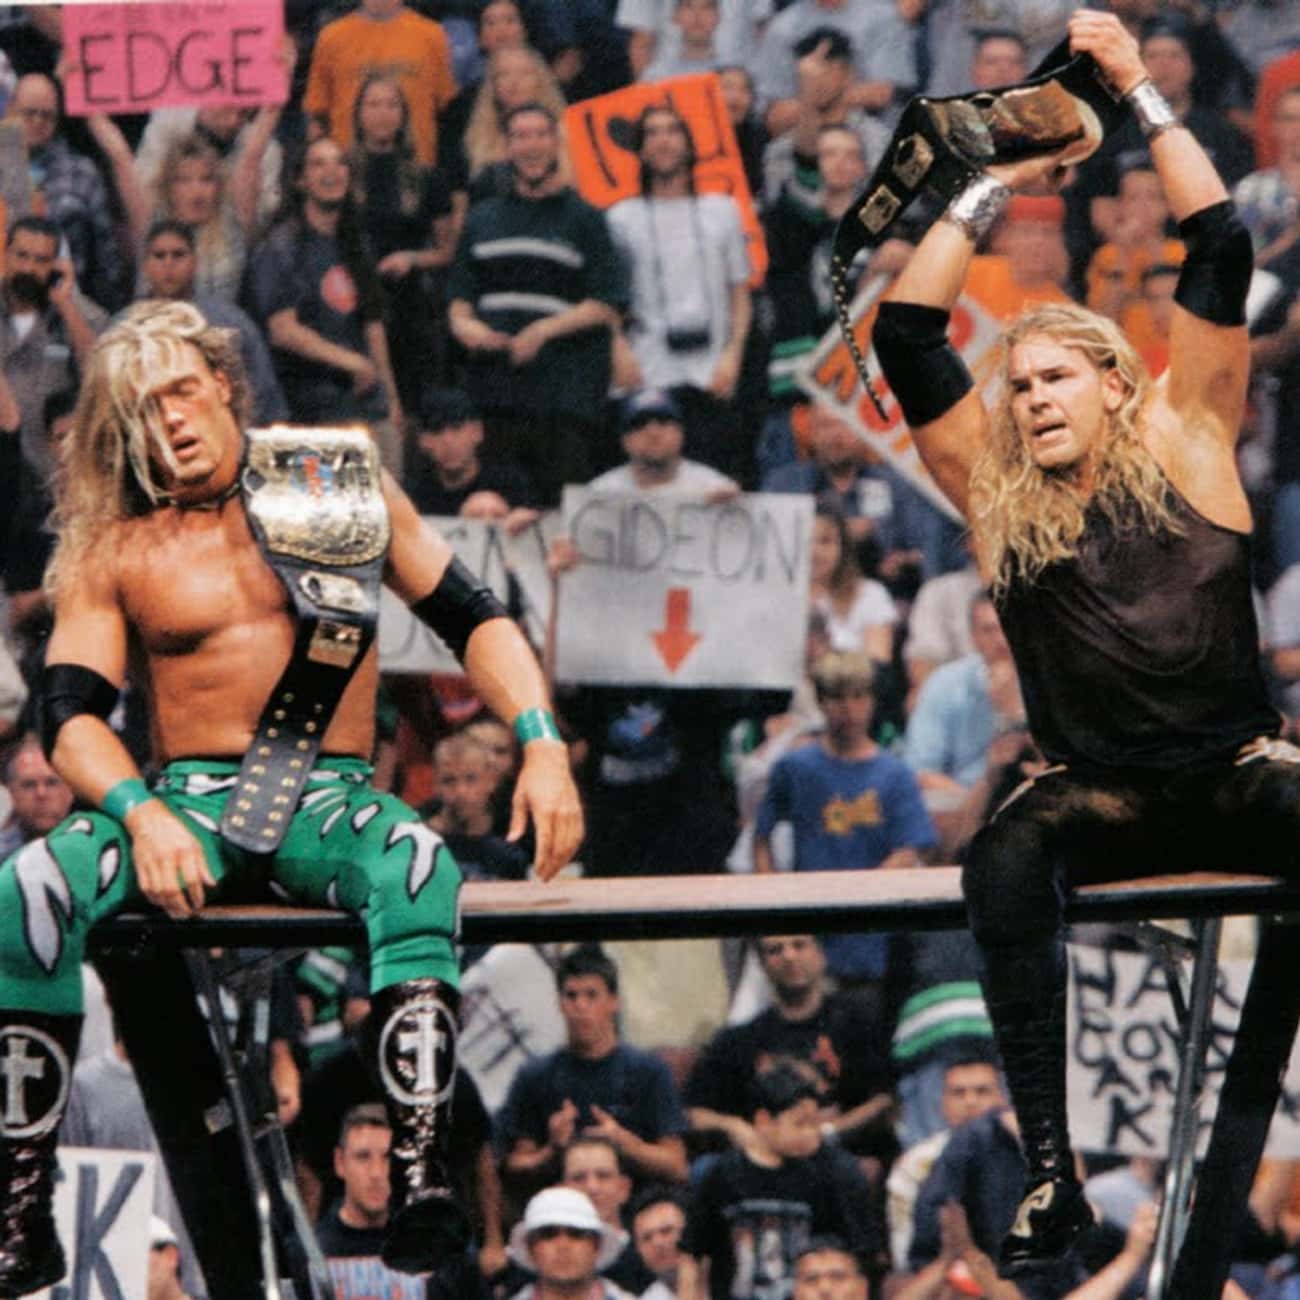 The Hardy Boyz vs. The Dudley Boyz vs. Edge